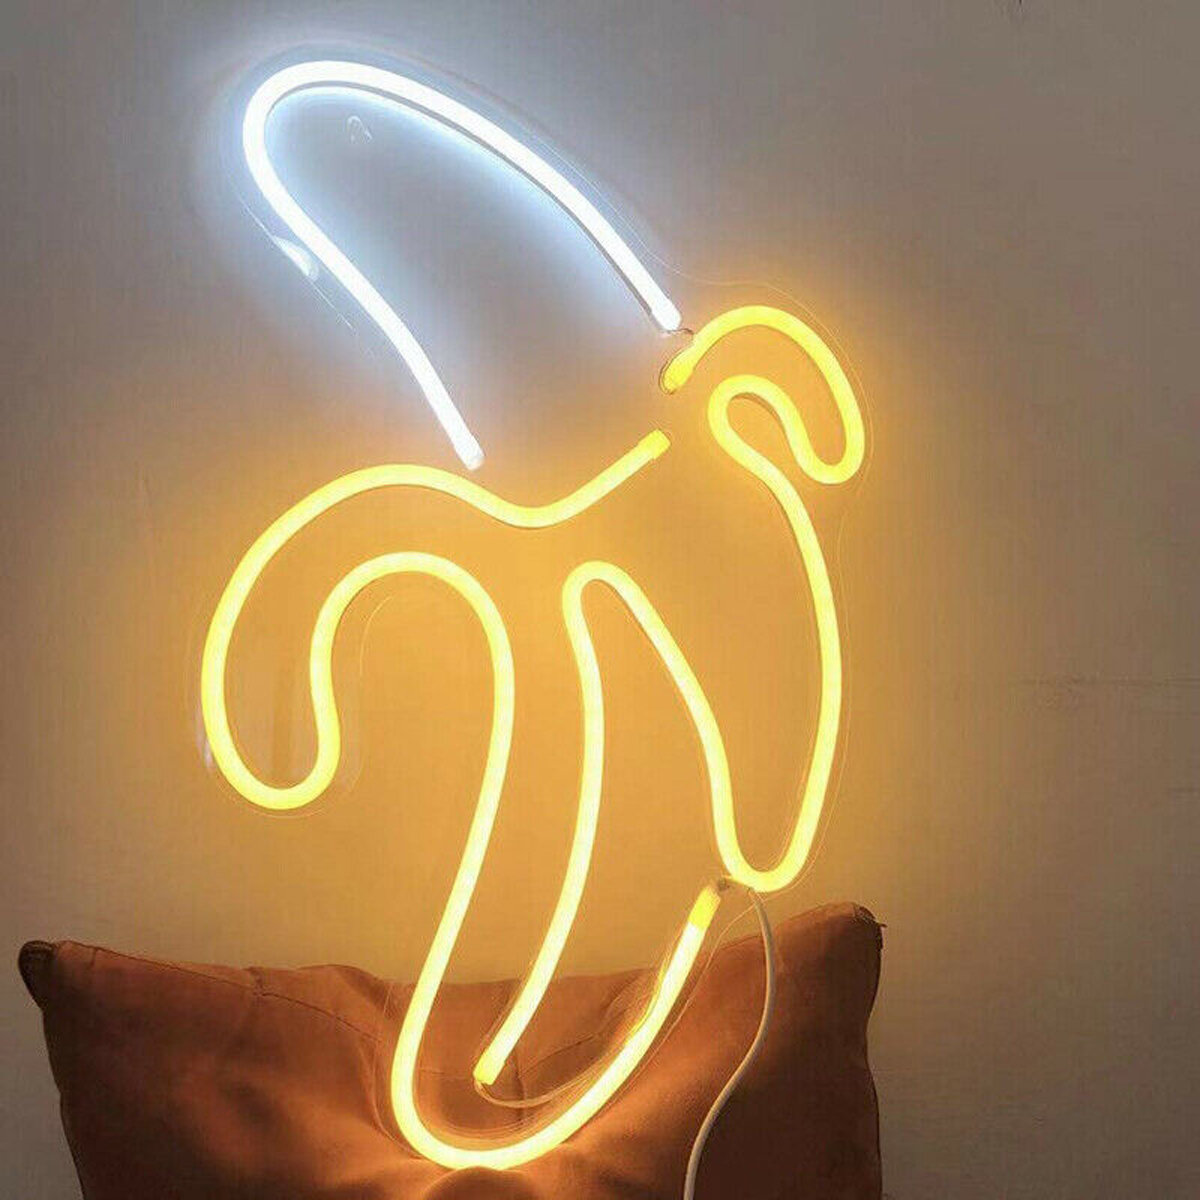 Banana led neon sign light art wall lamp for bar pub